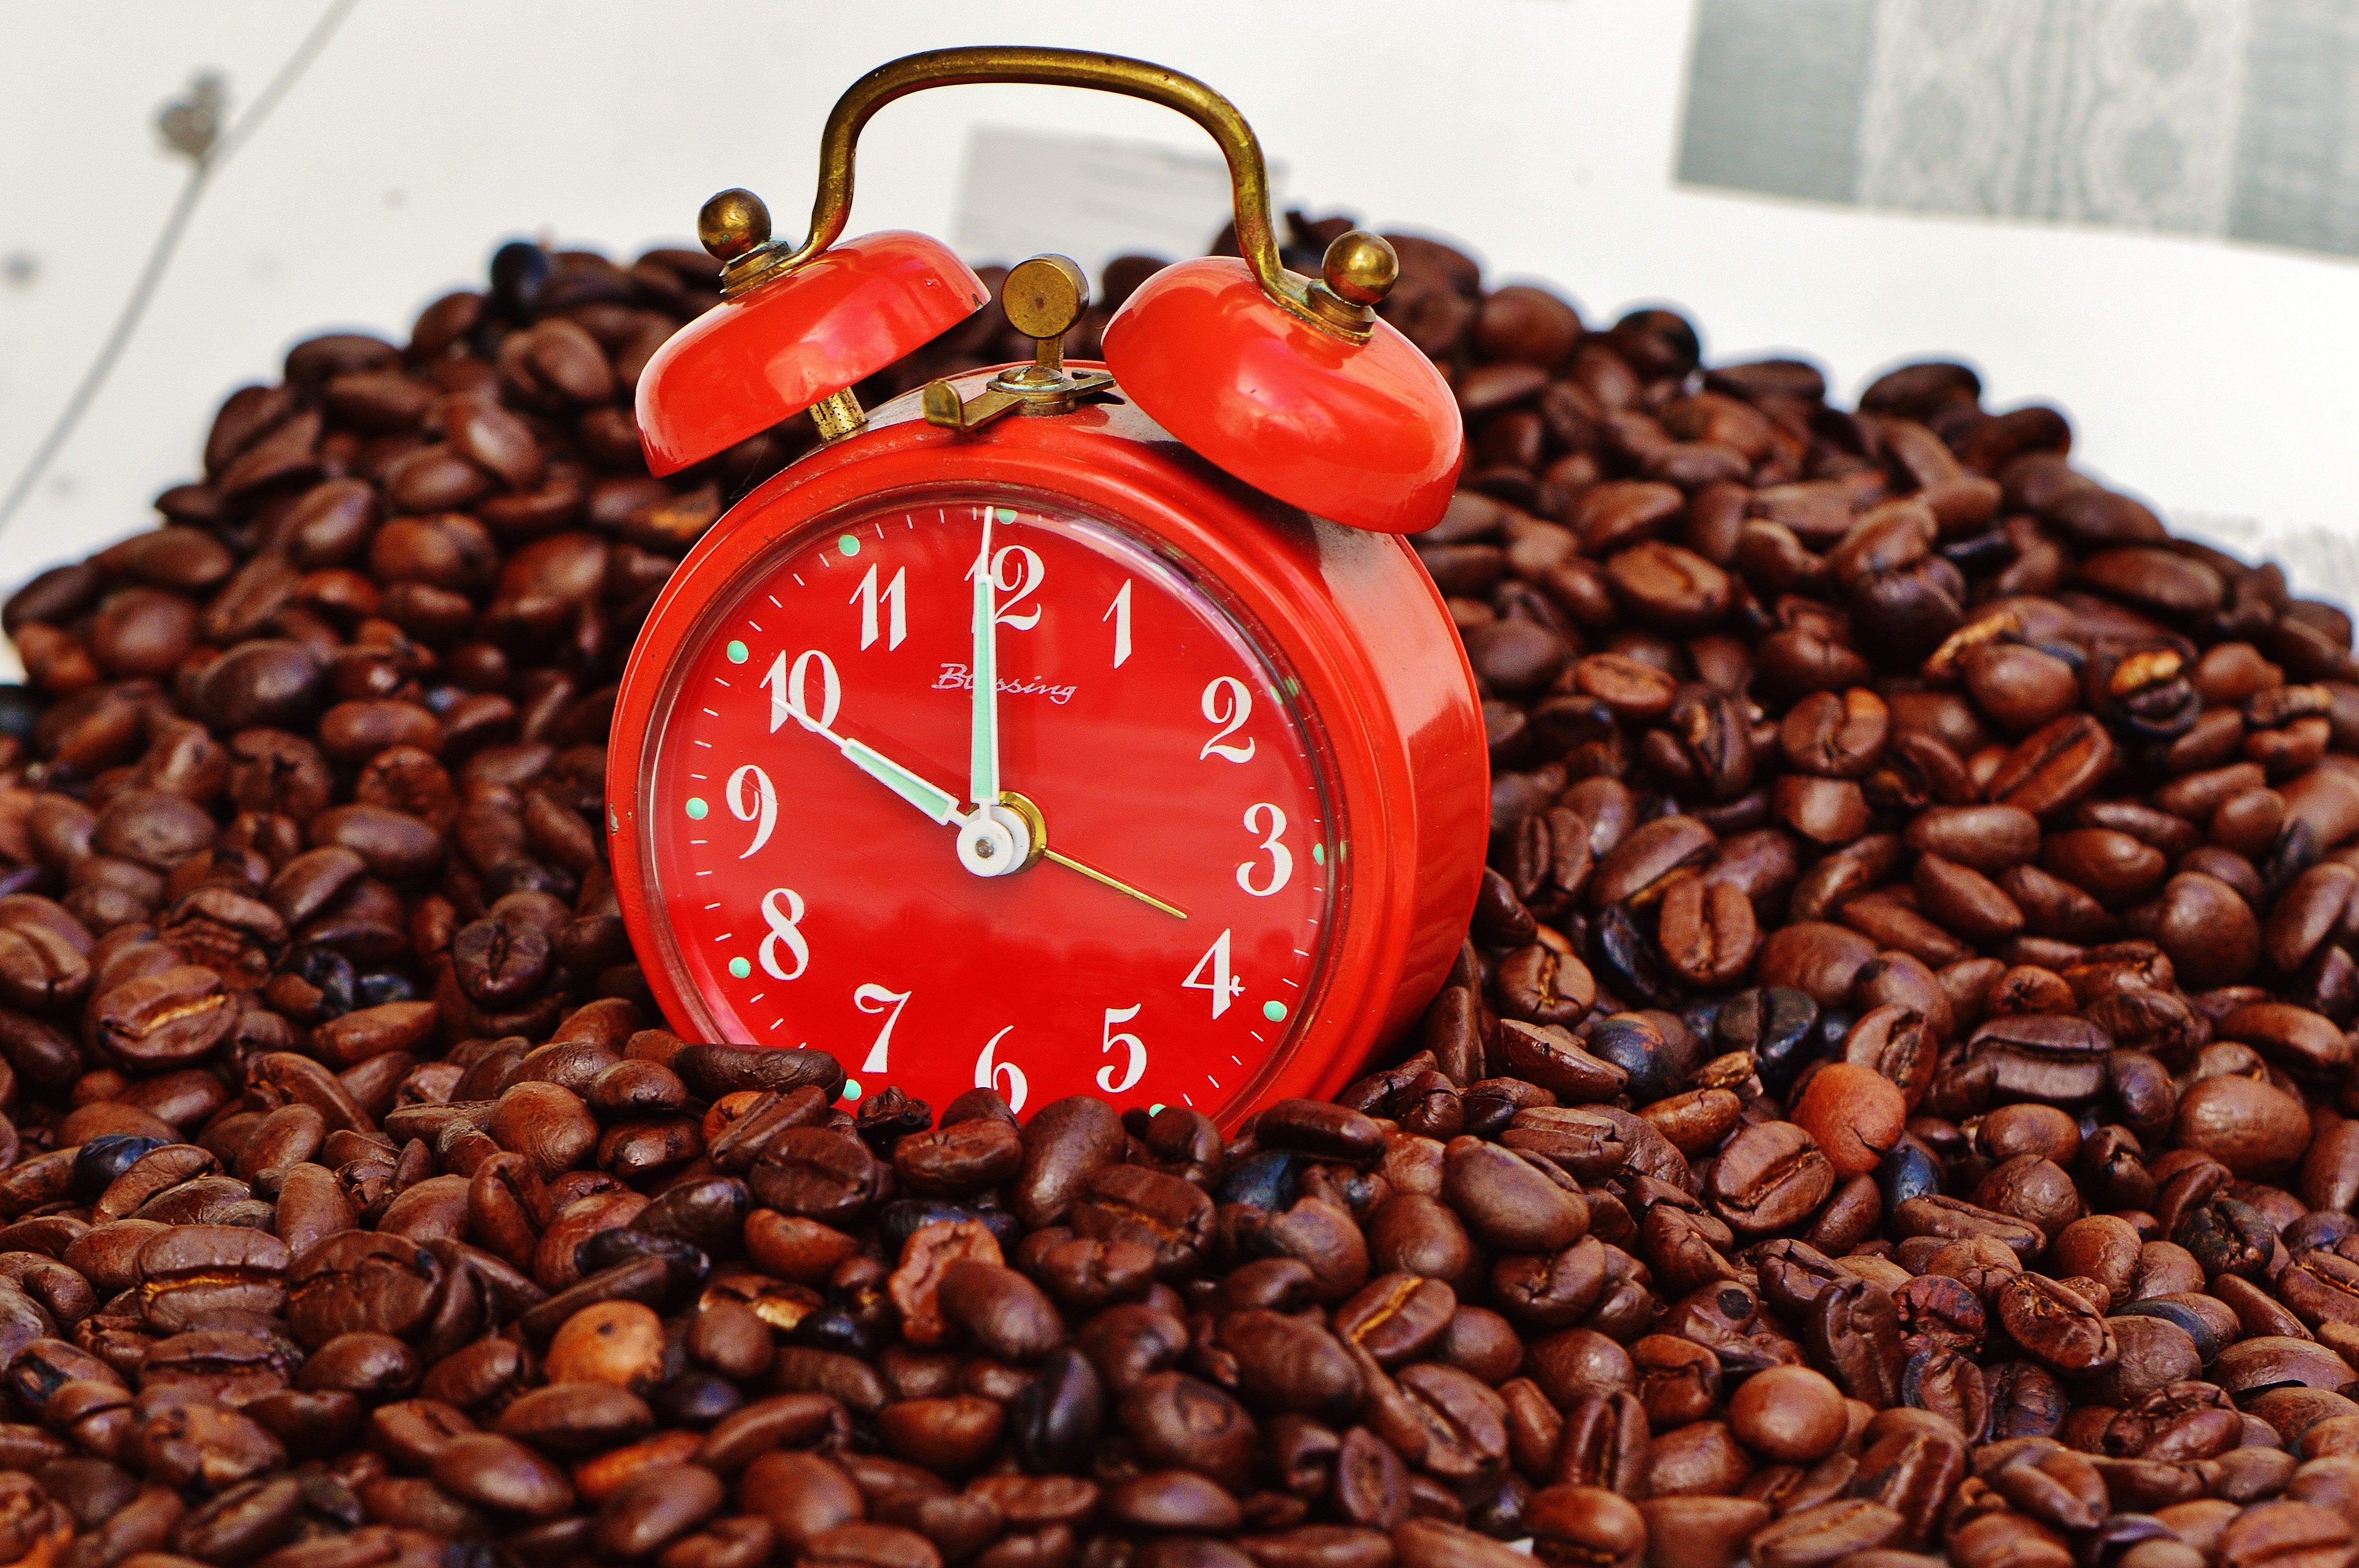 Alarm Clock, Time, Break, Coffee Break, time, clock